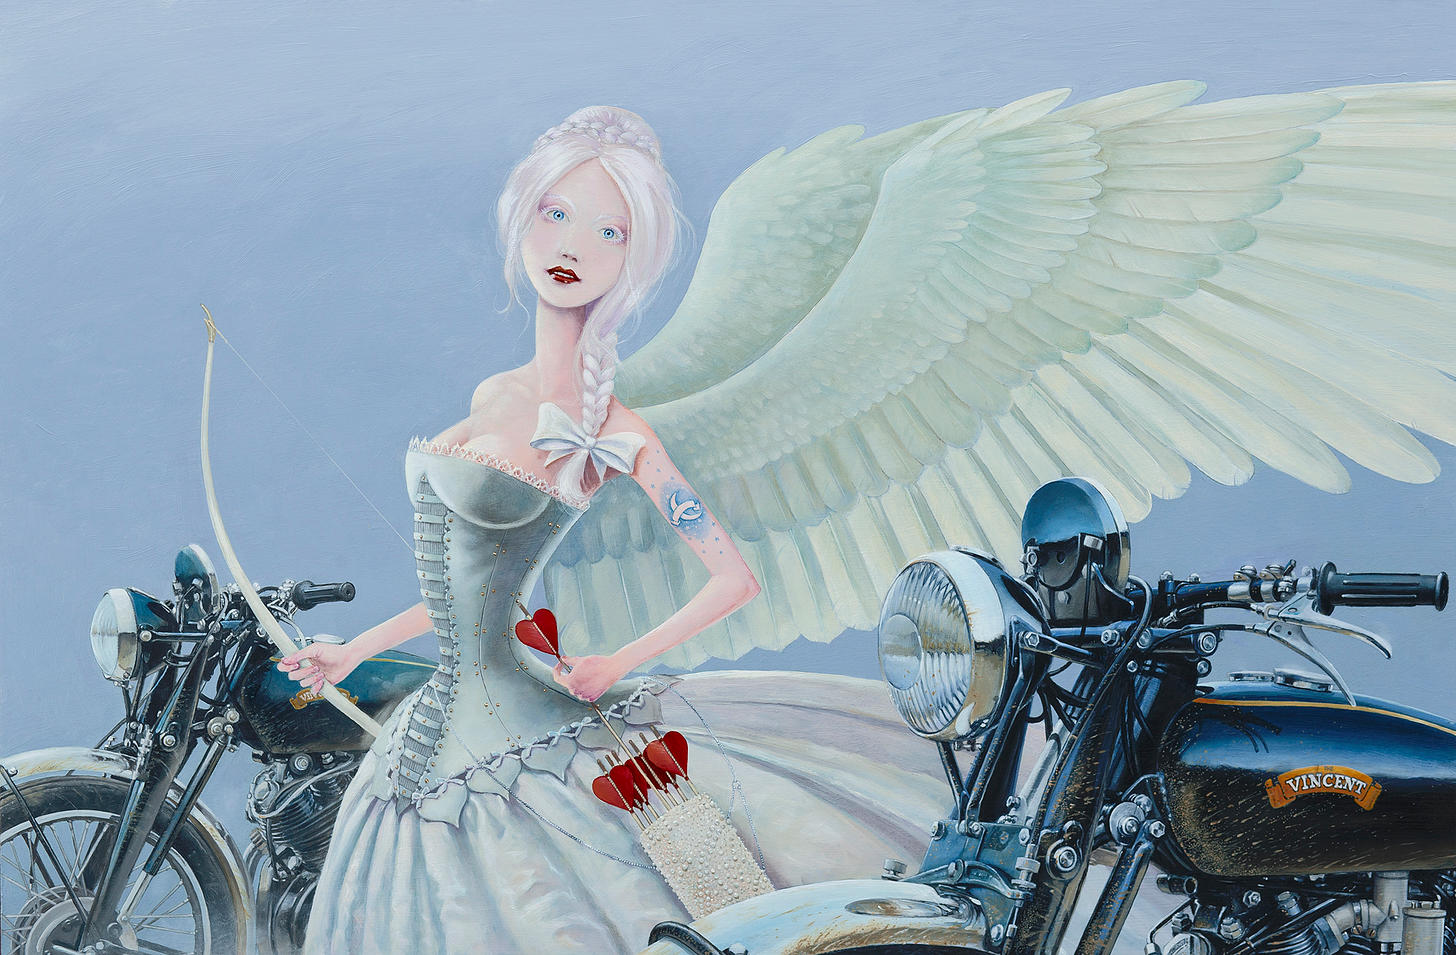 Huntress Angel motorcycle woman illustration by Brett Breckon